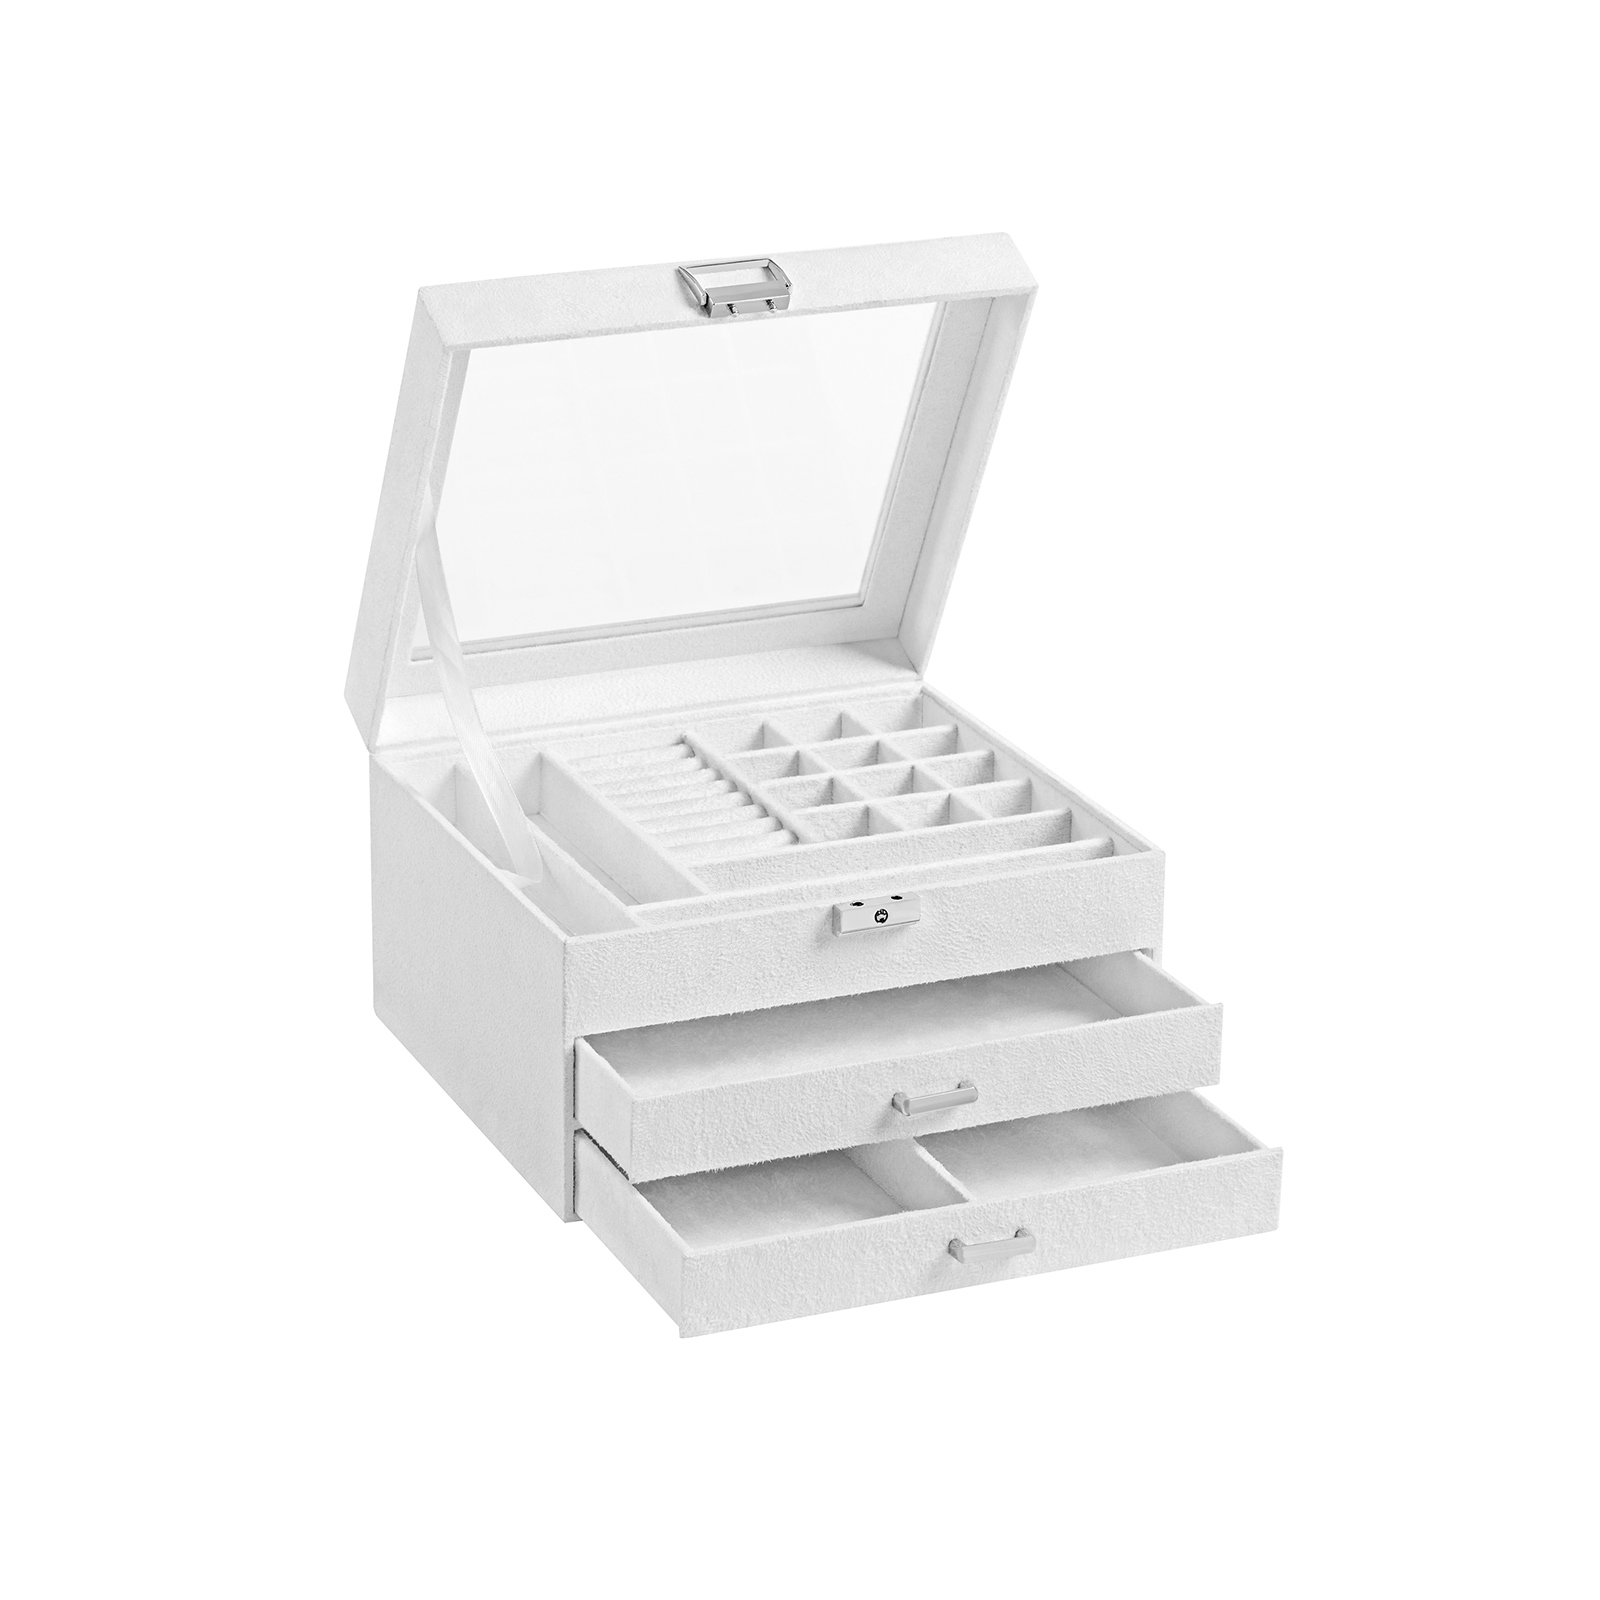 White Jewelry Box with Velvet Cover | Jewelry Storage & Organization ...